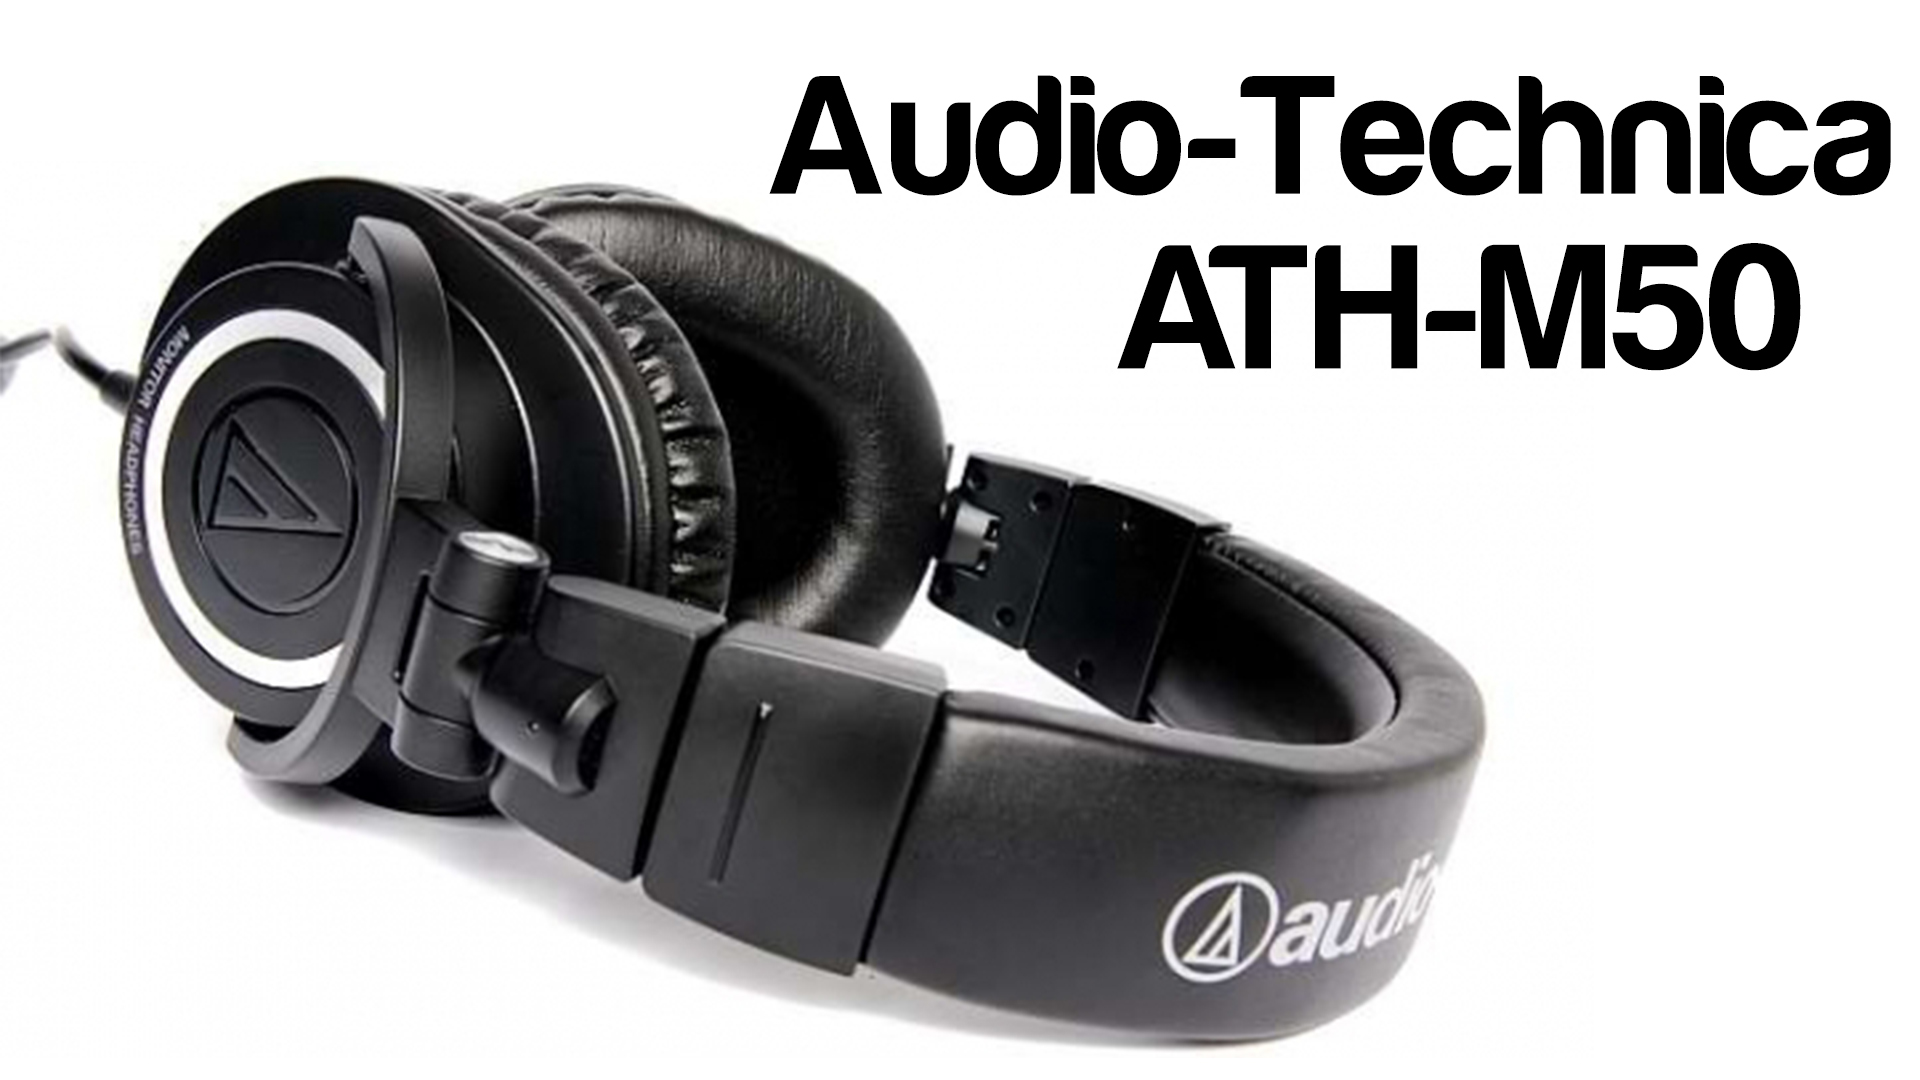 Audio-Technica ATH-M50 Headphones Review